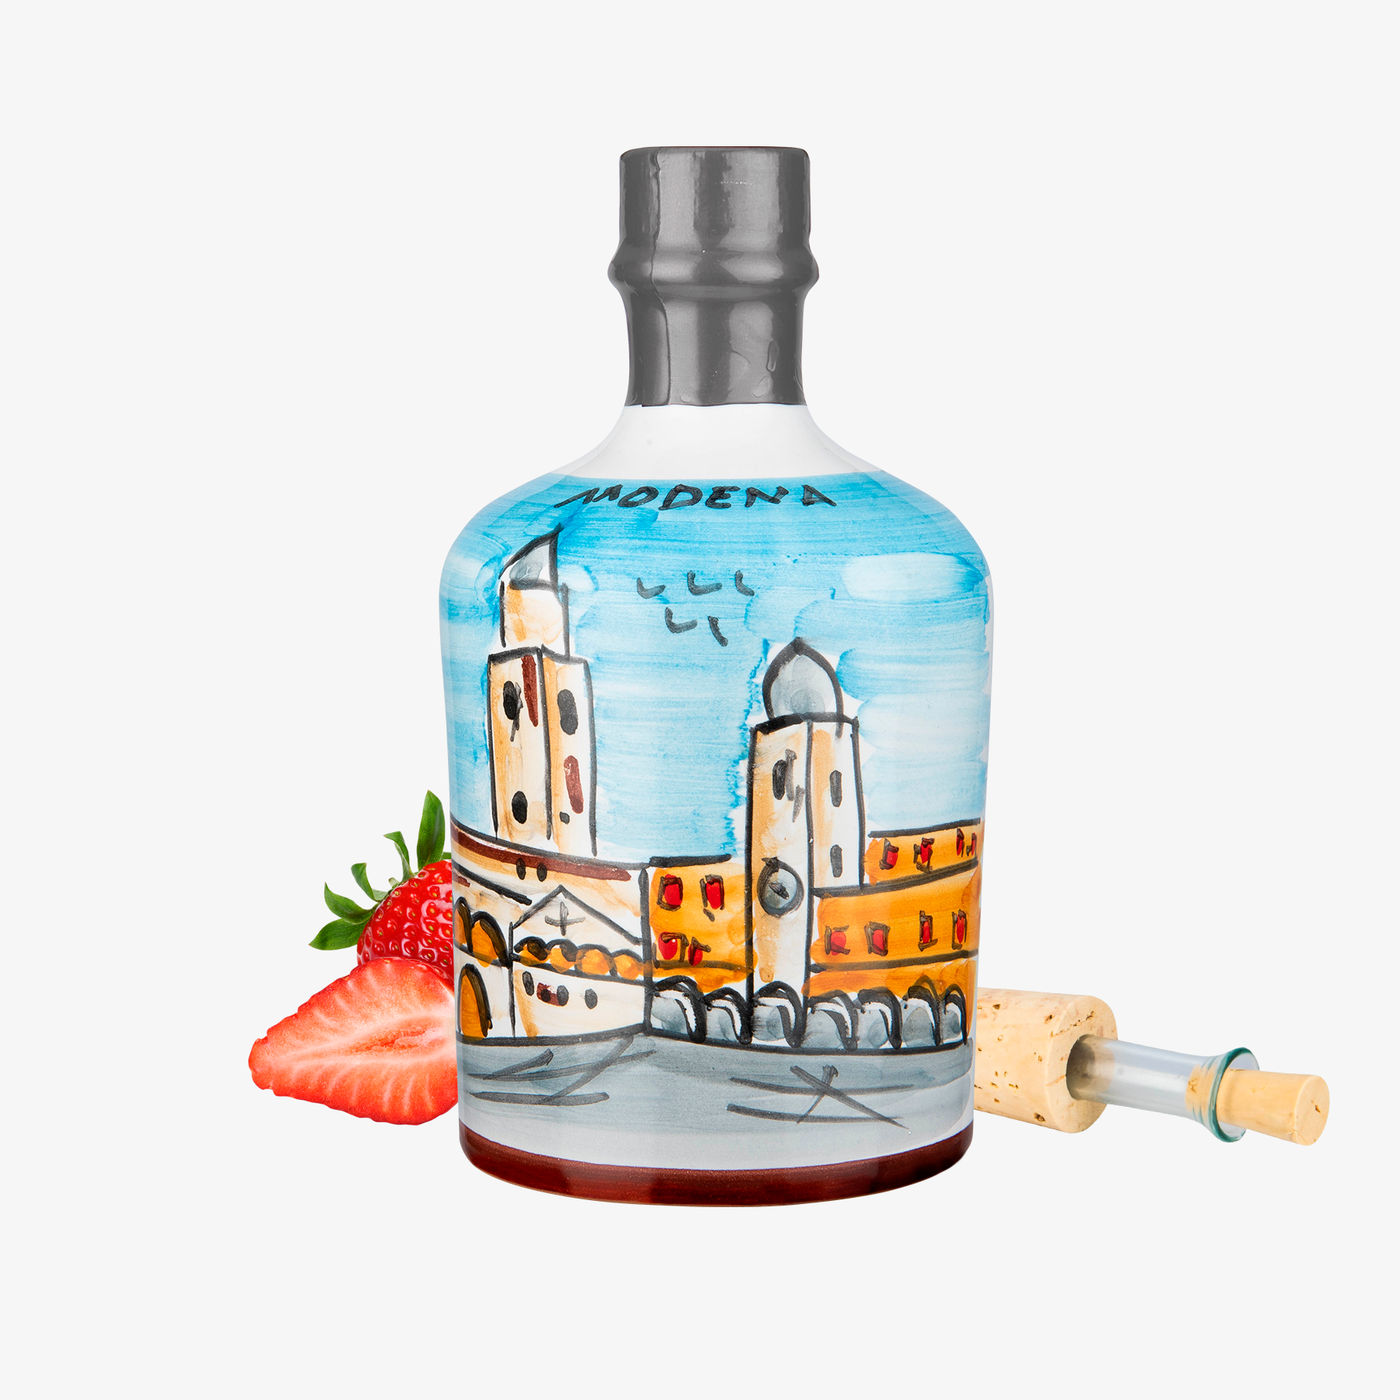 White Balsamic Vinegar of Modena Jar by Acetaia Malpighi